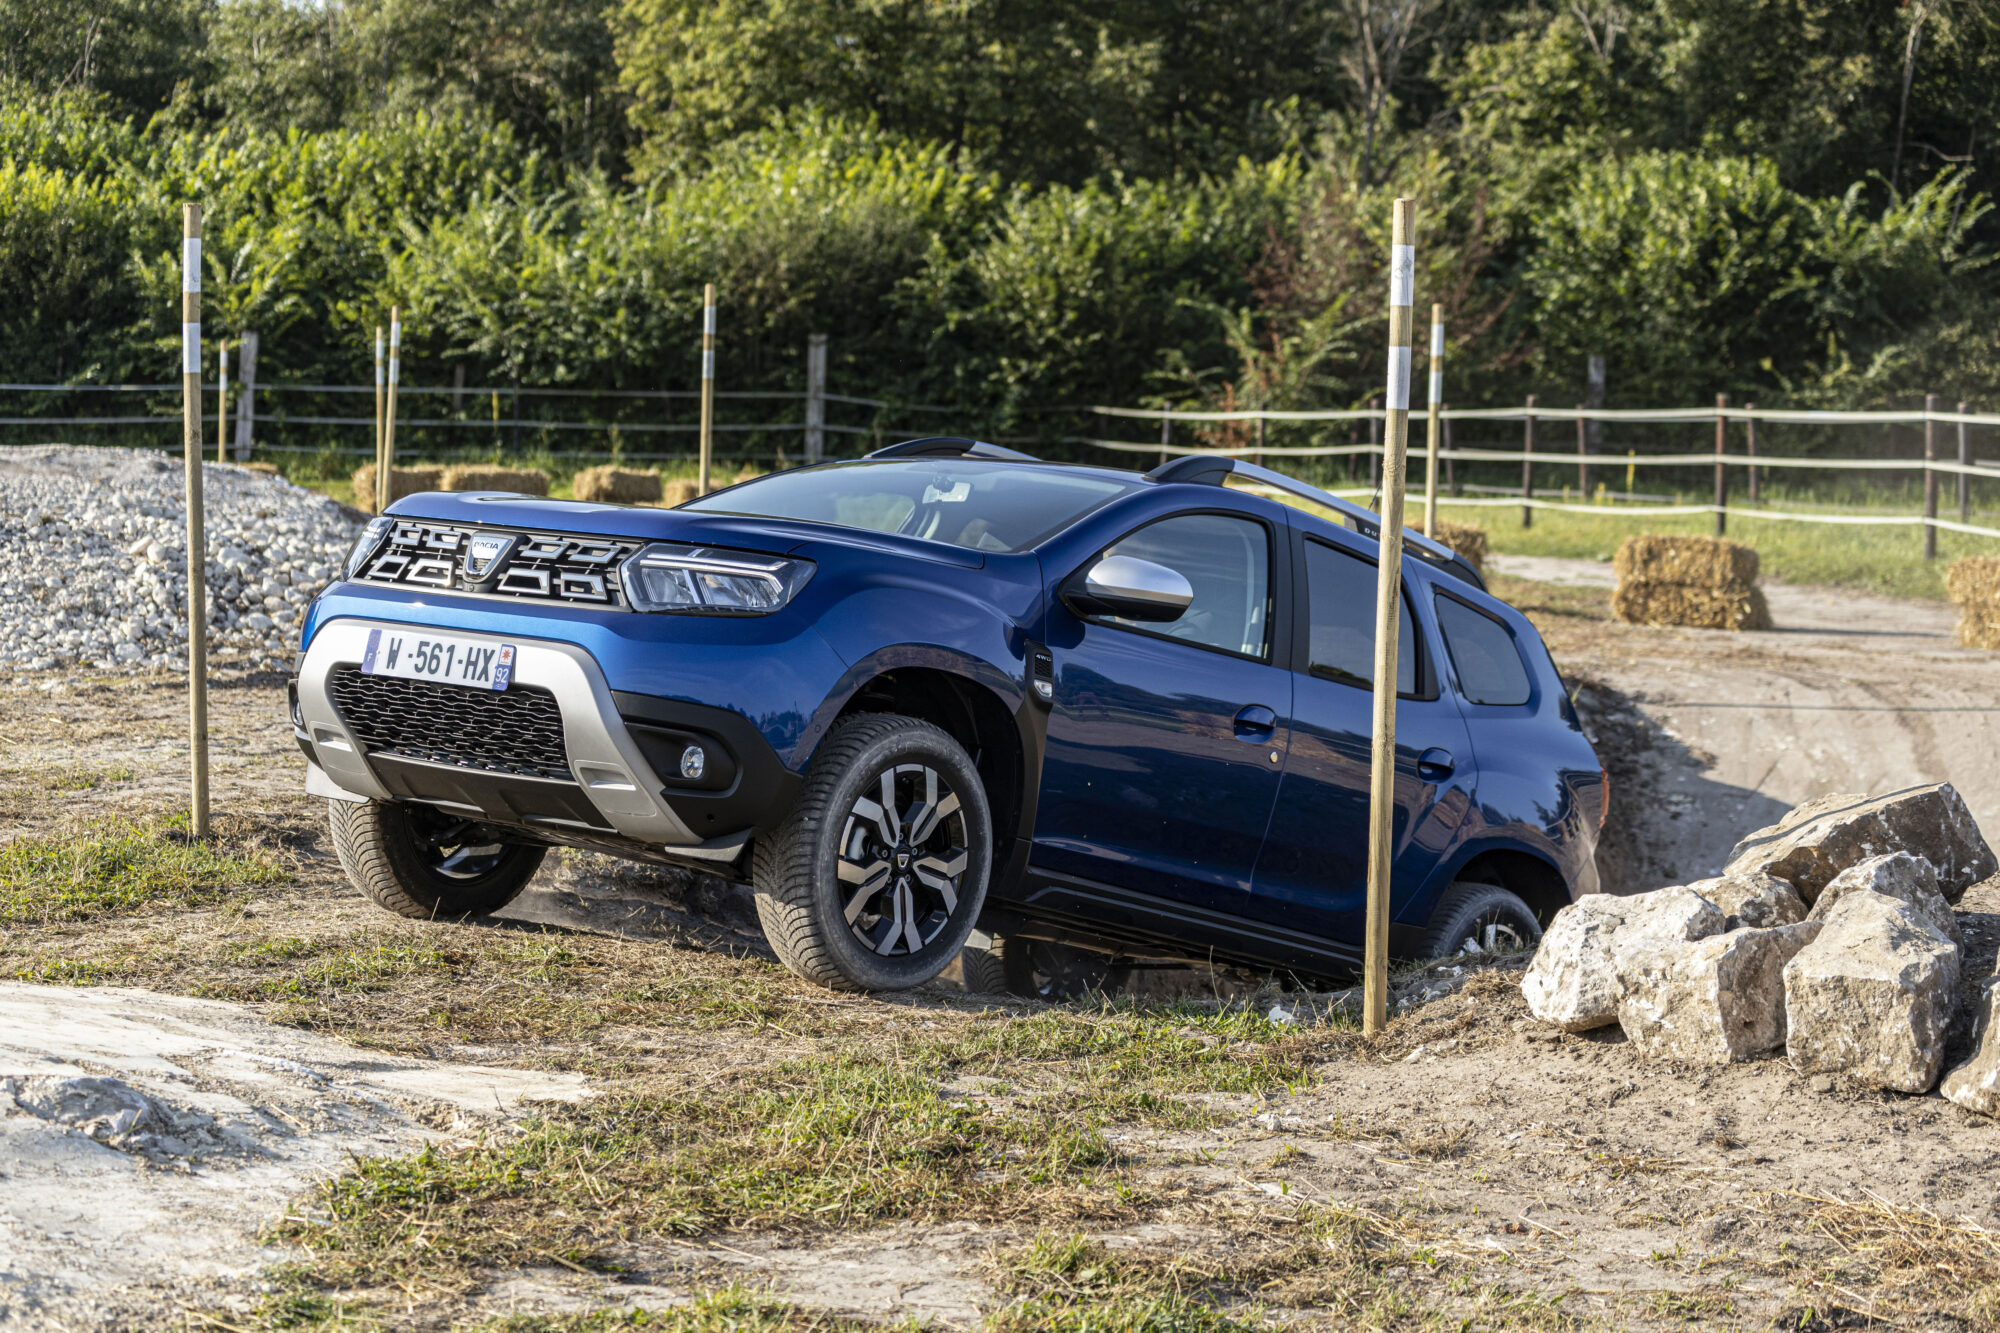 2021 - Essais presse Nouveau Dacia Duster 4X4 - Bleu Iron